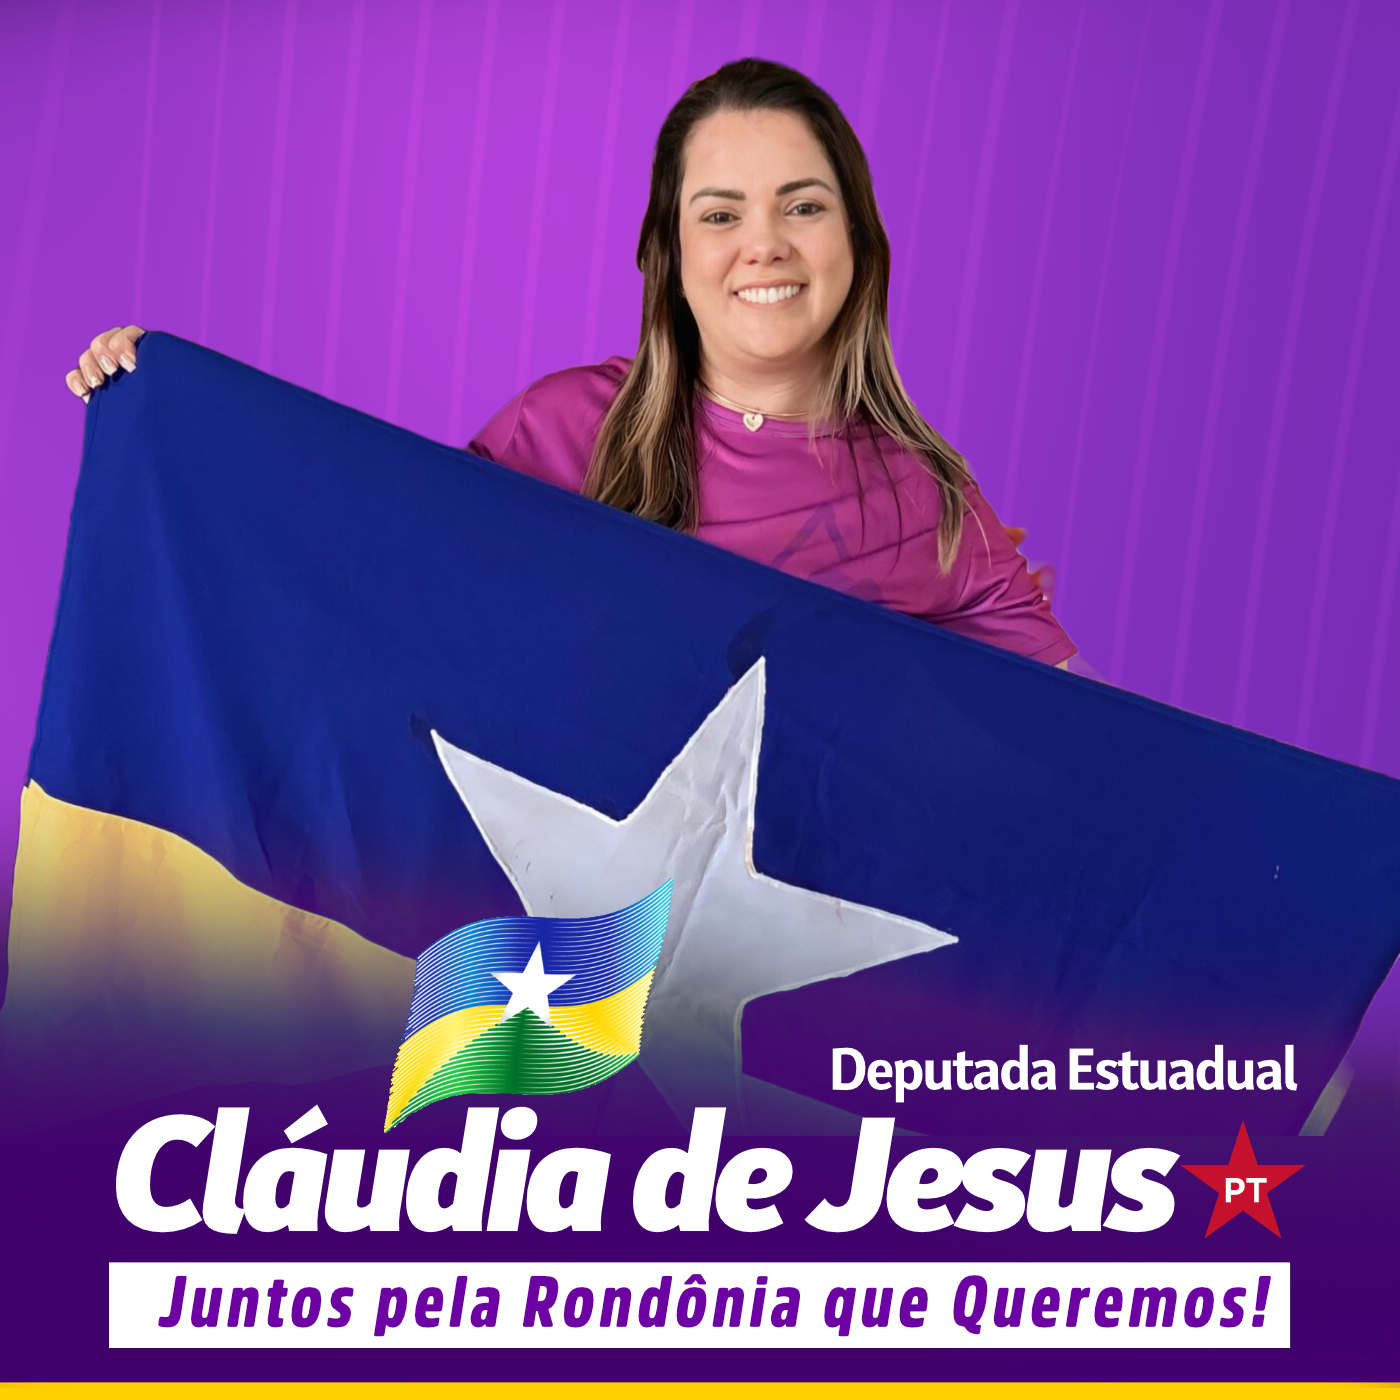 Deputada Estadual Cláudia de Jesus